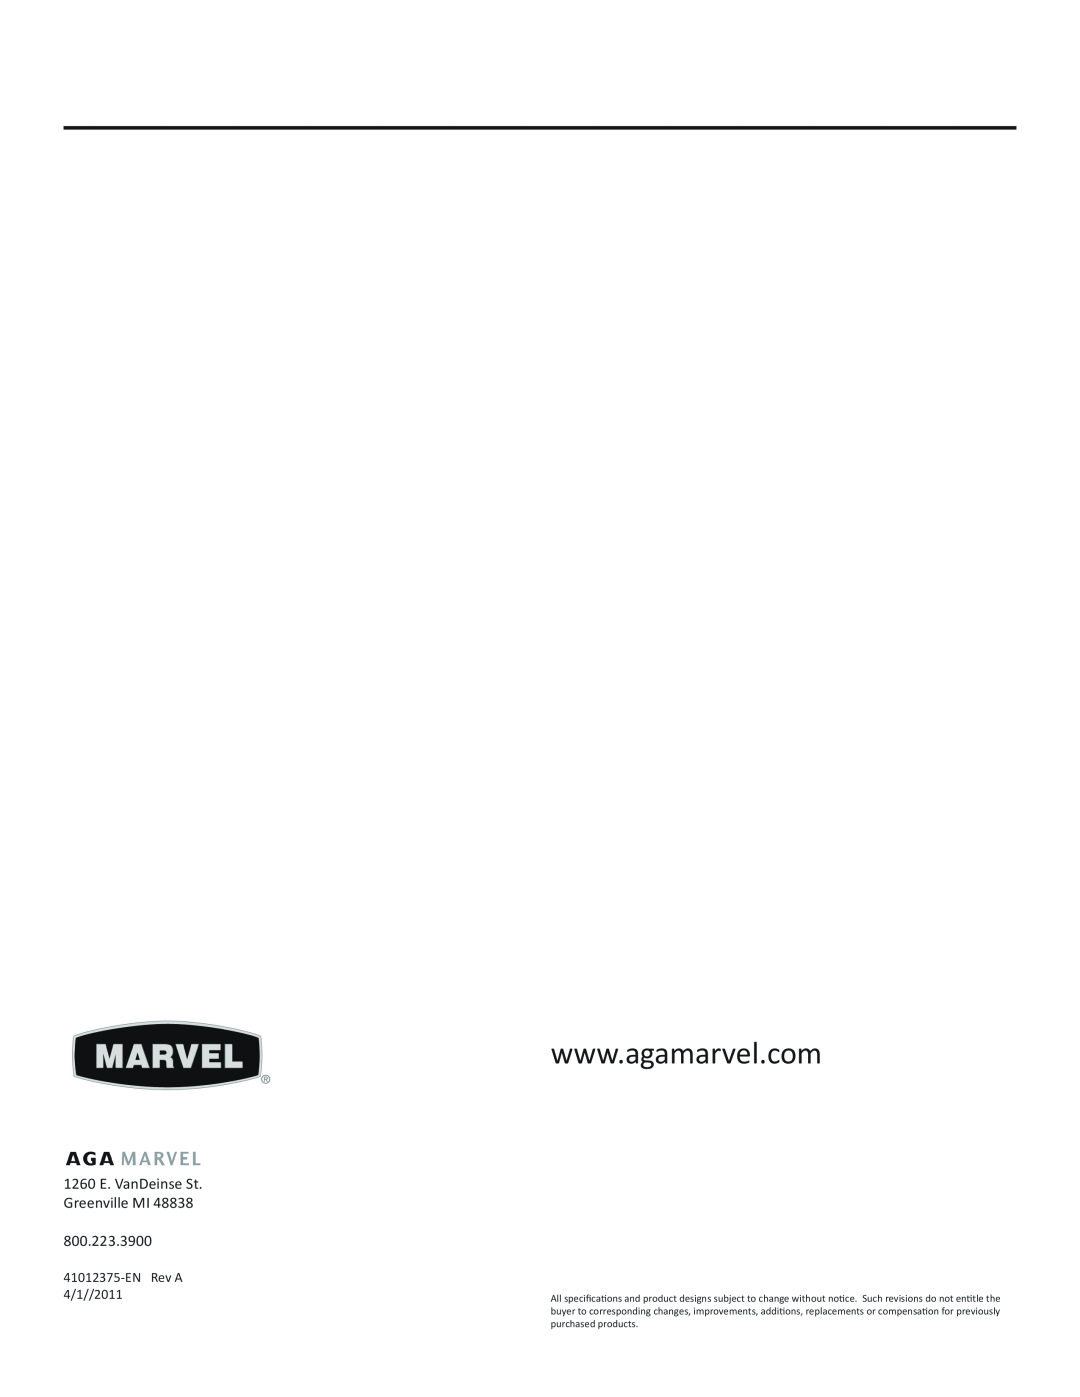 Marvel Group 6GARMP manual 1260 E. VanDeinse St. Greenville MI, EN Rev A 4/1//2011 